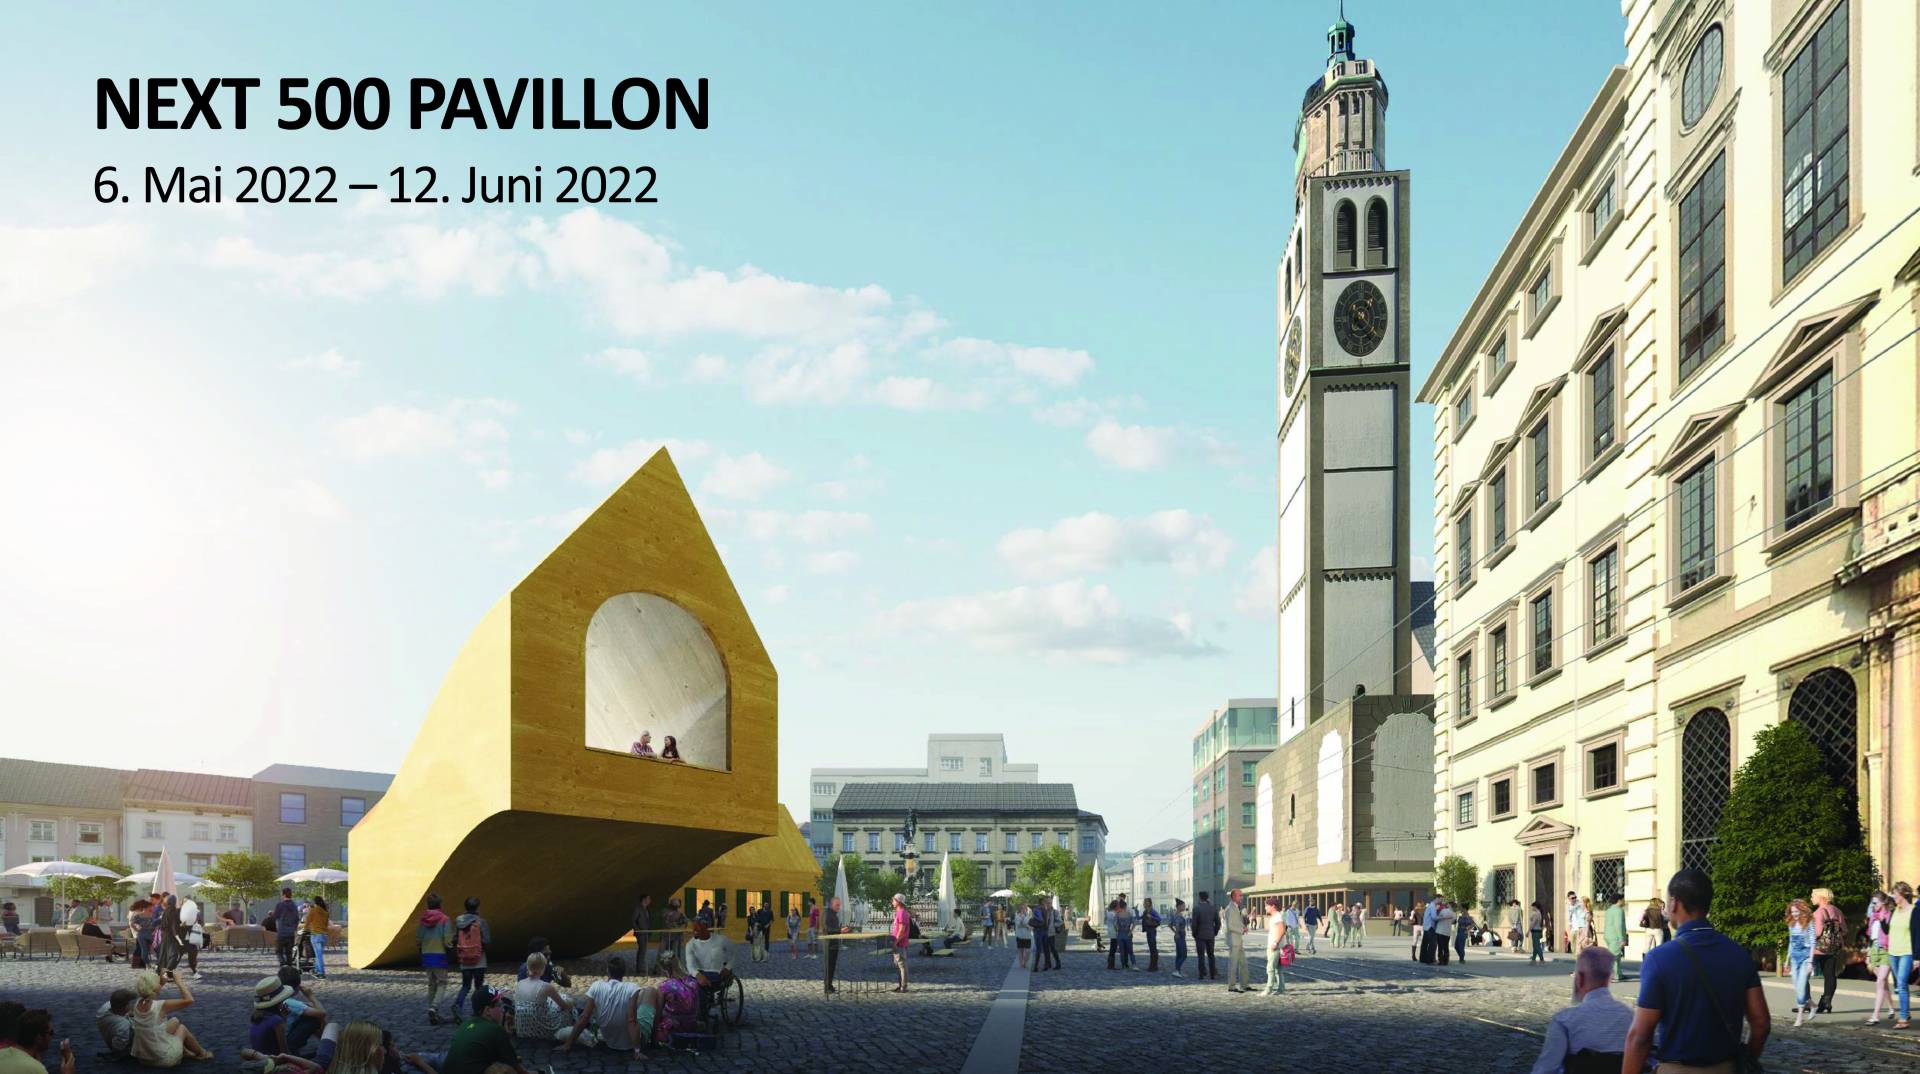 Next-500 Pavillon